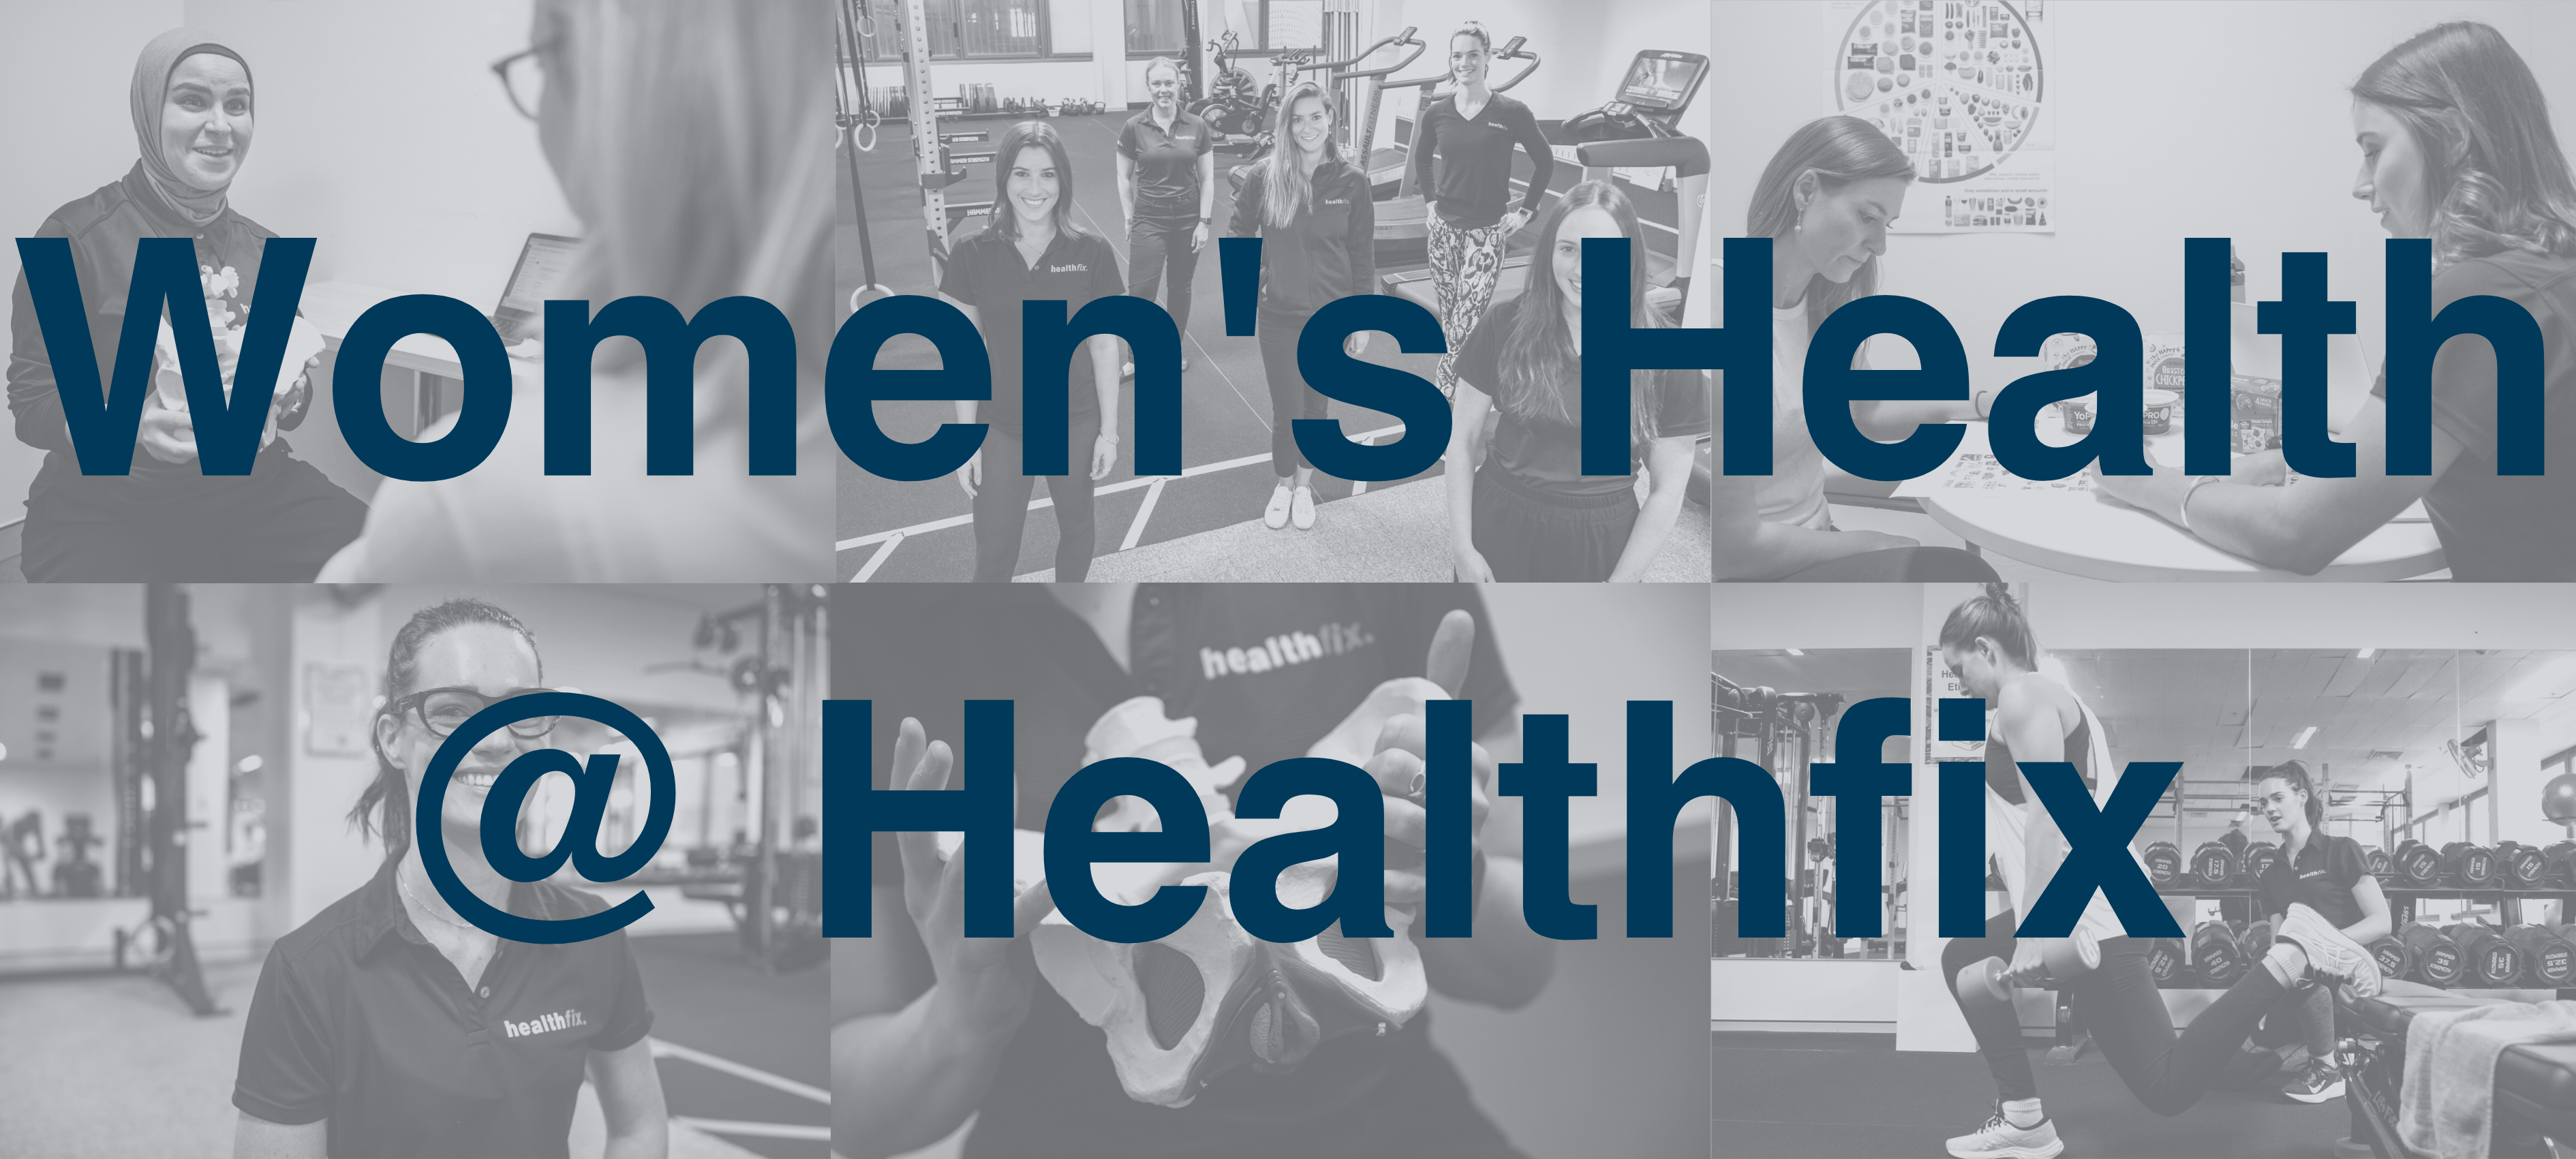 Women's Health @ Healthfix Banner